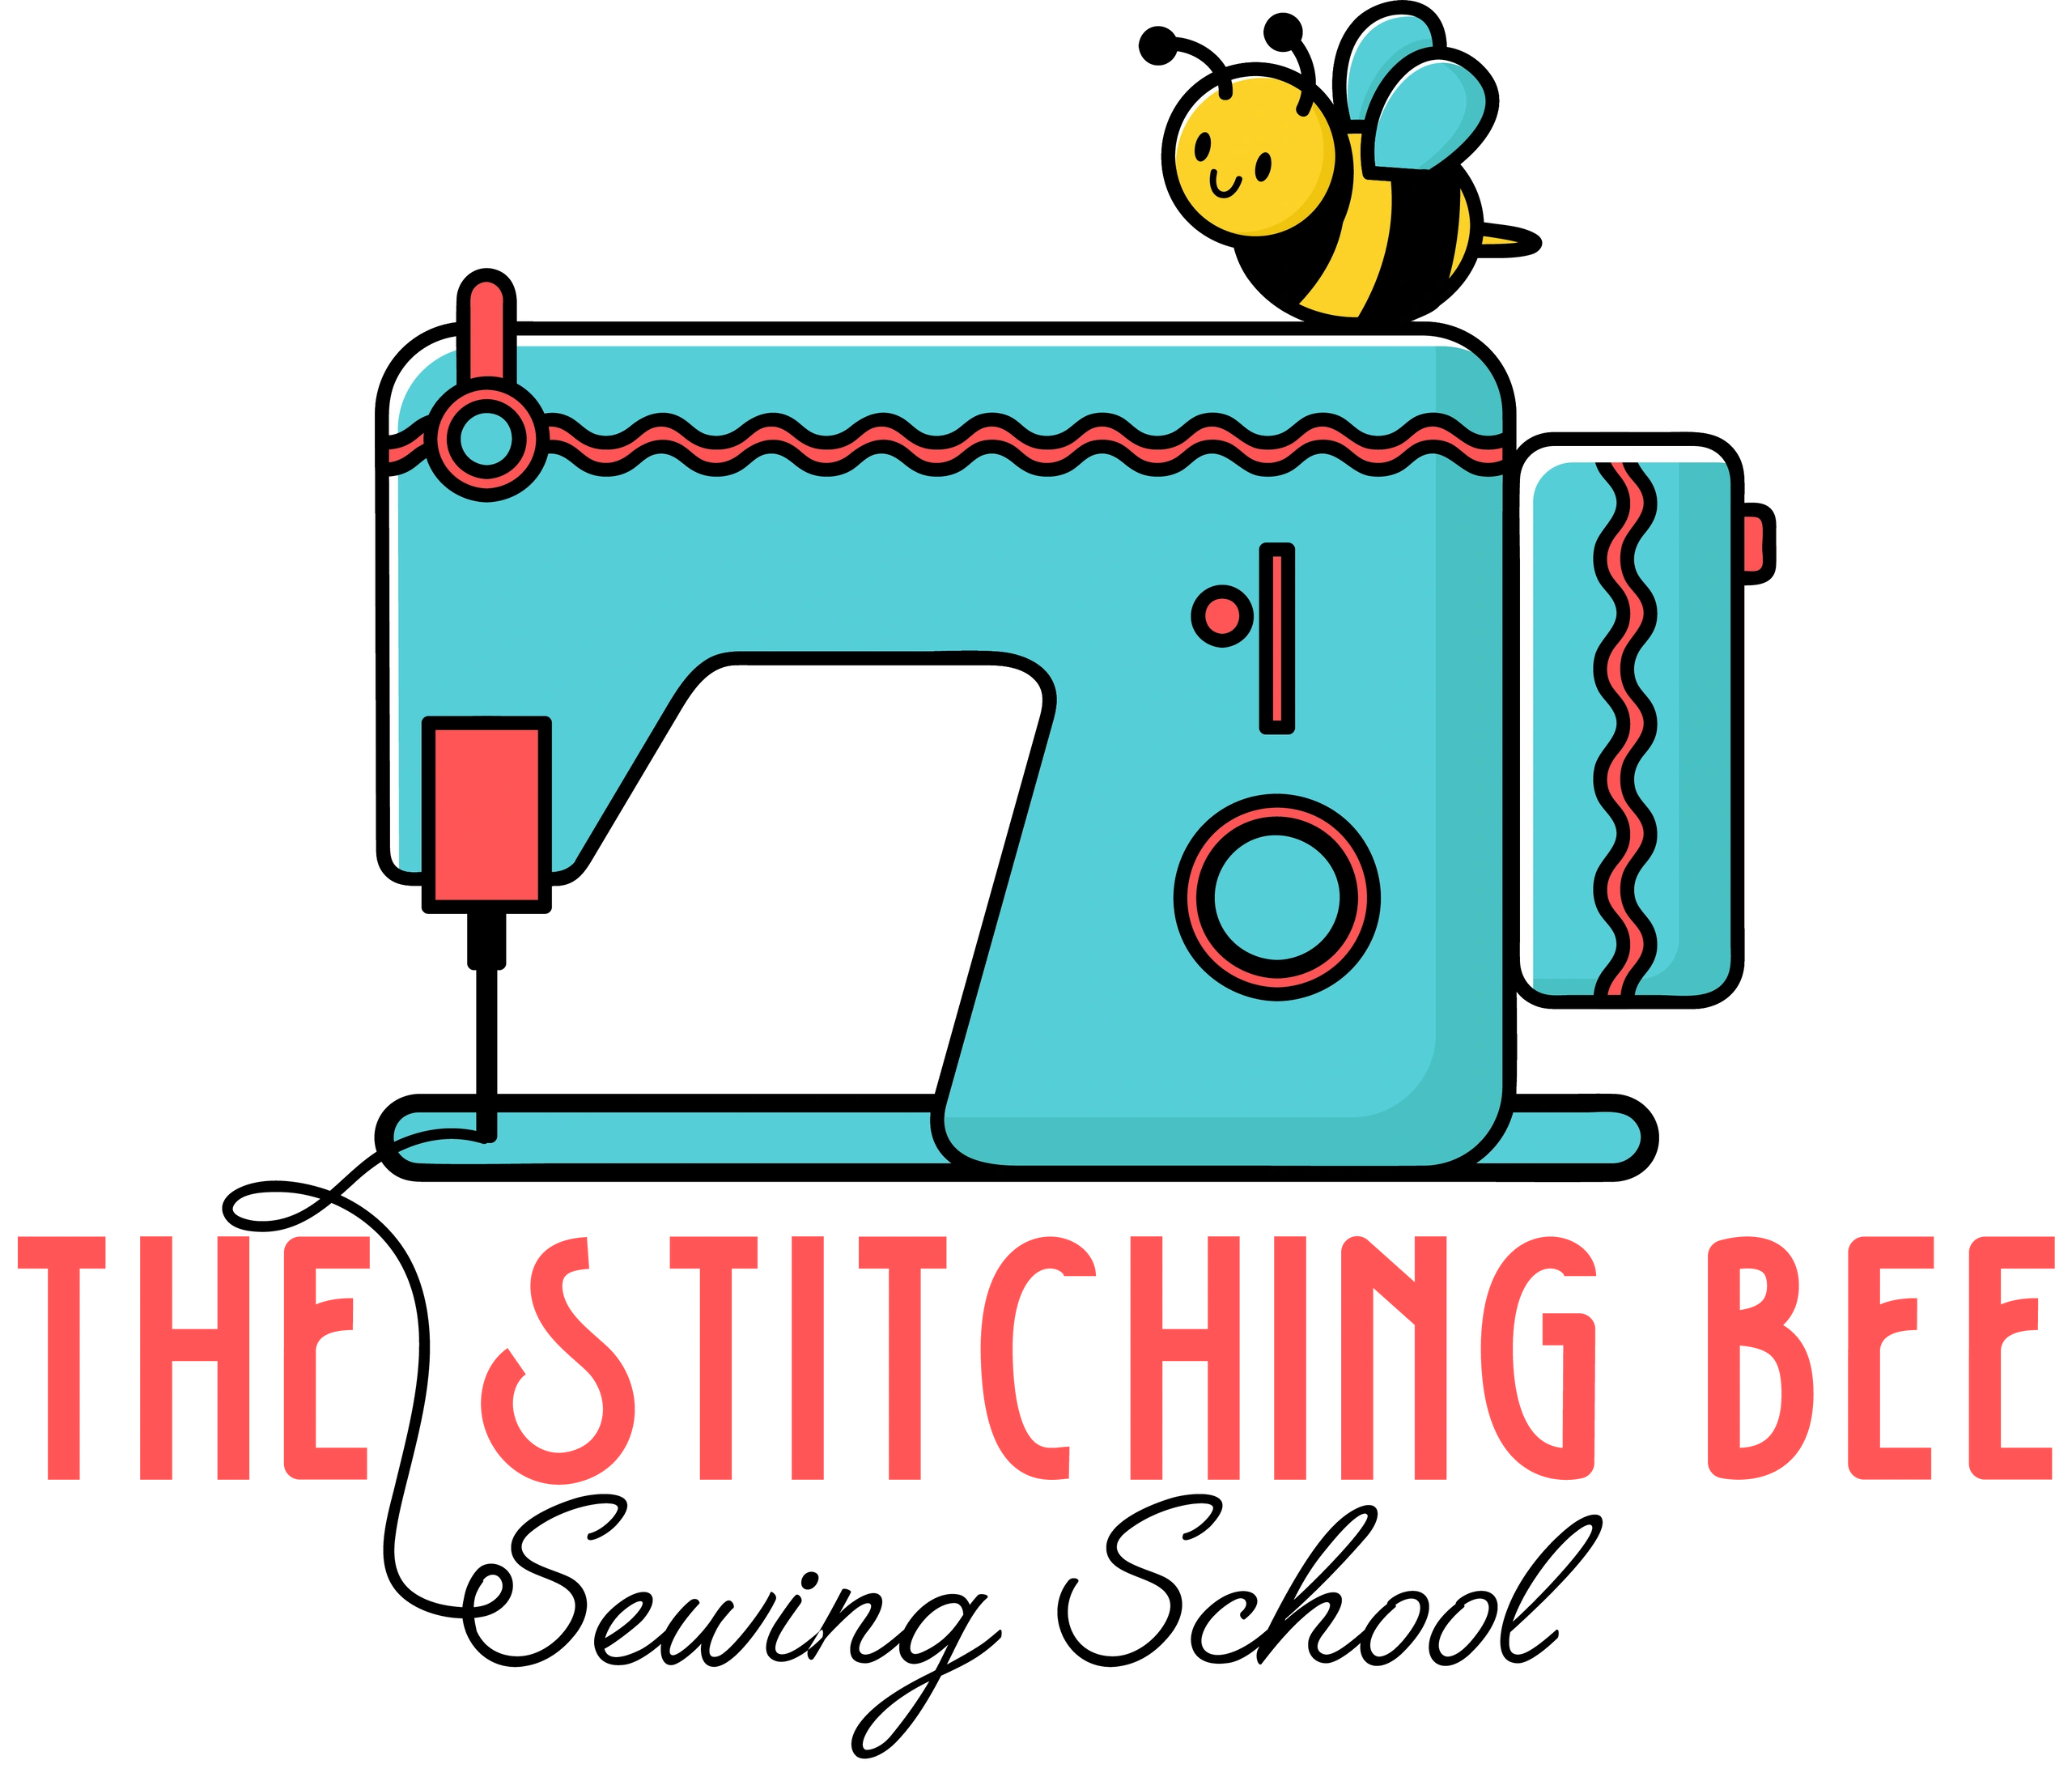 (c) Stitchingbee.net